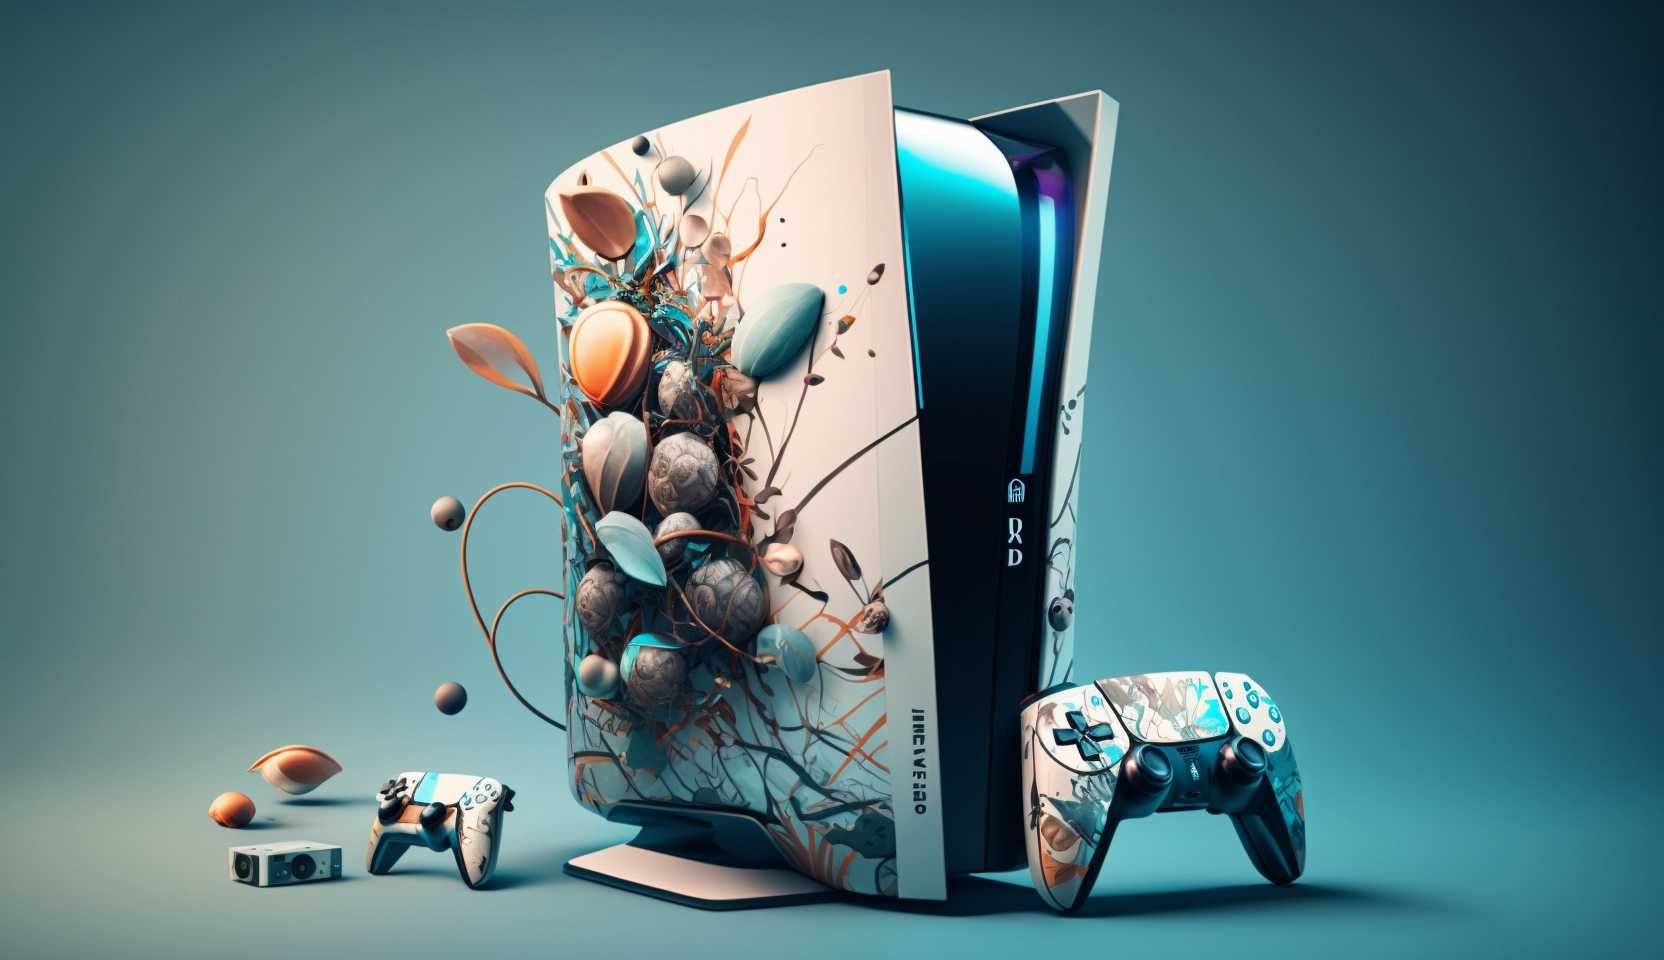 PlayStation 5 System Image